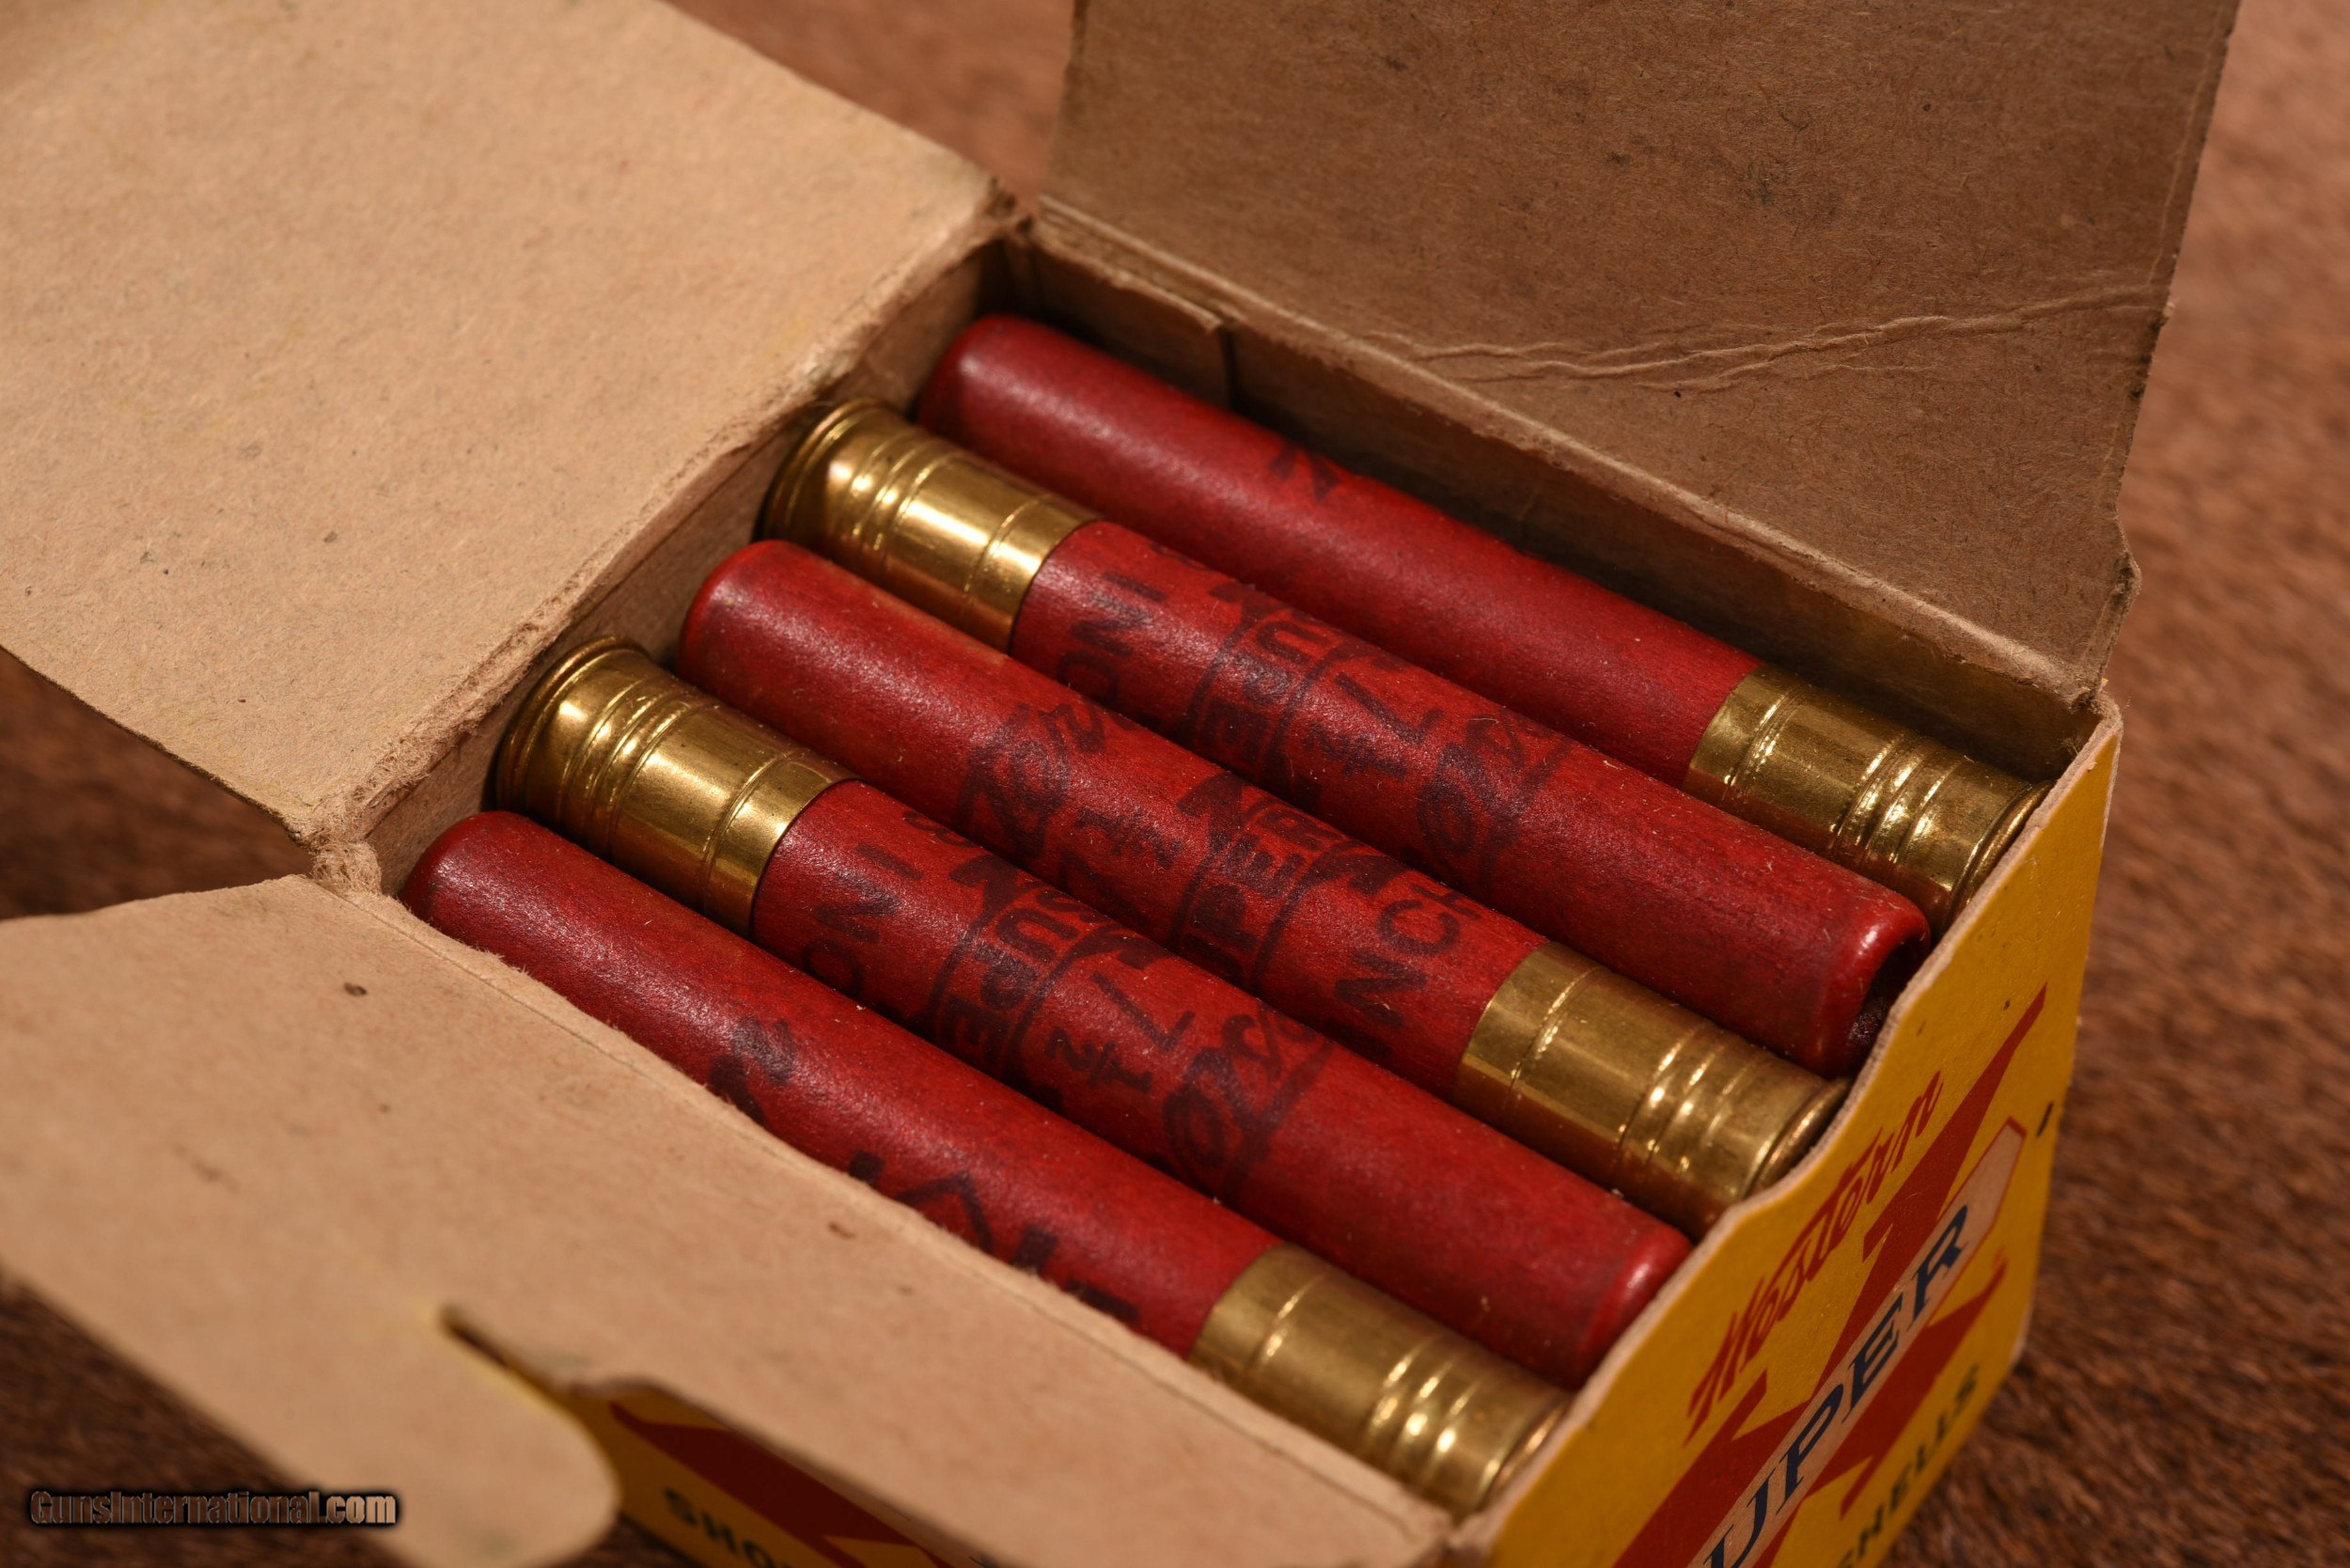 Western Super-X 410 shotgun shells